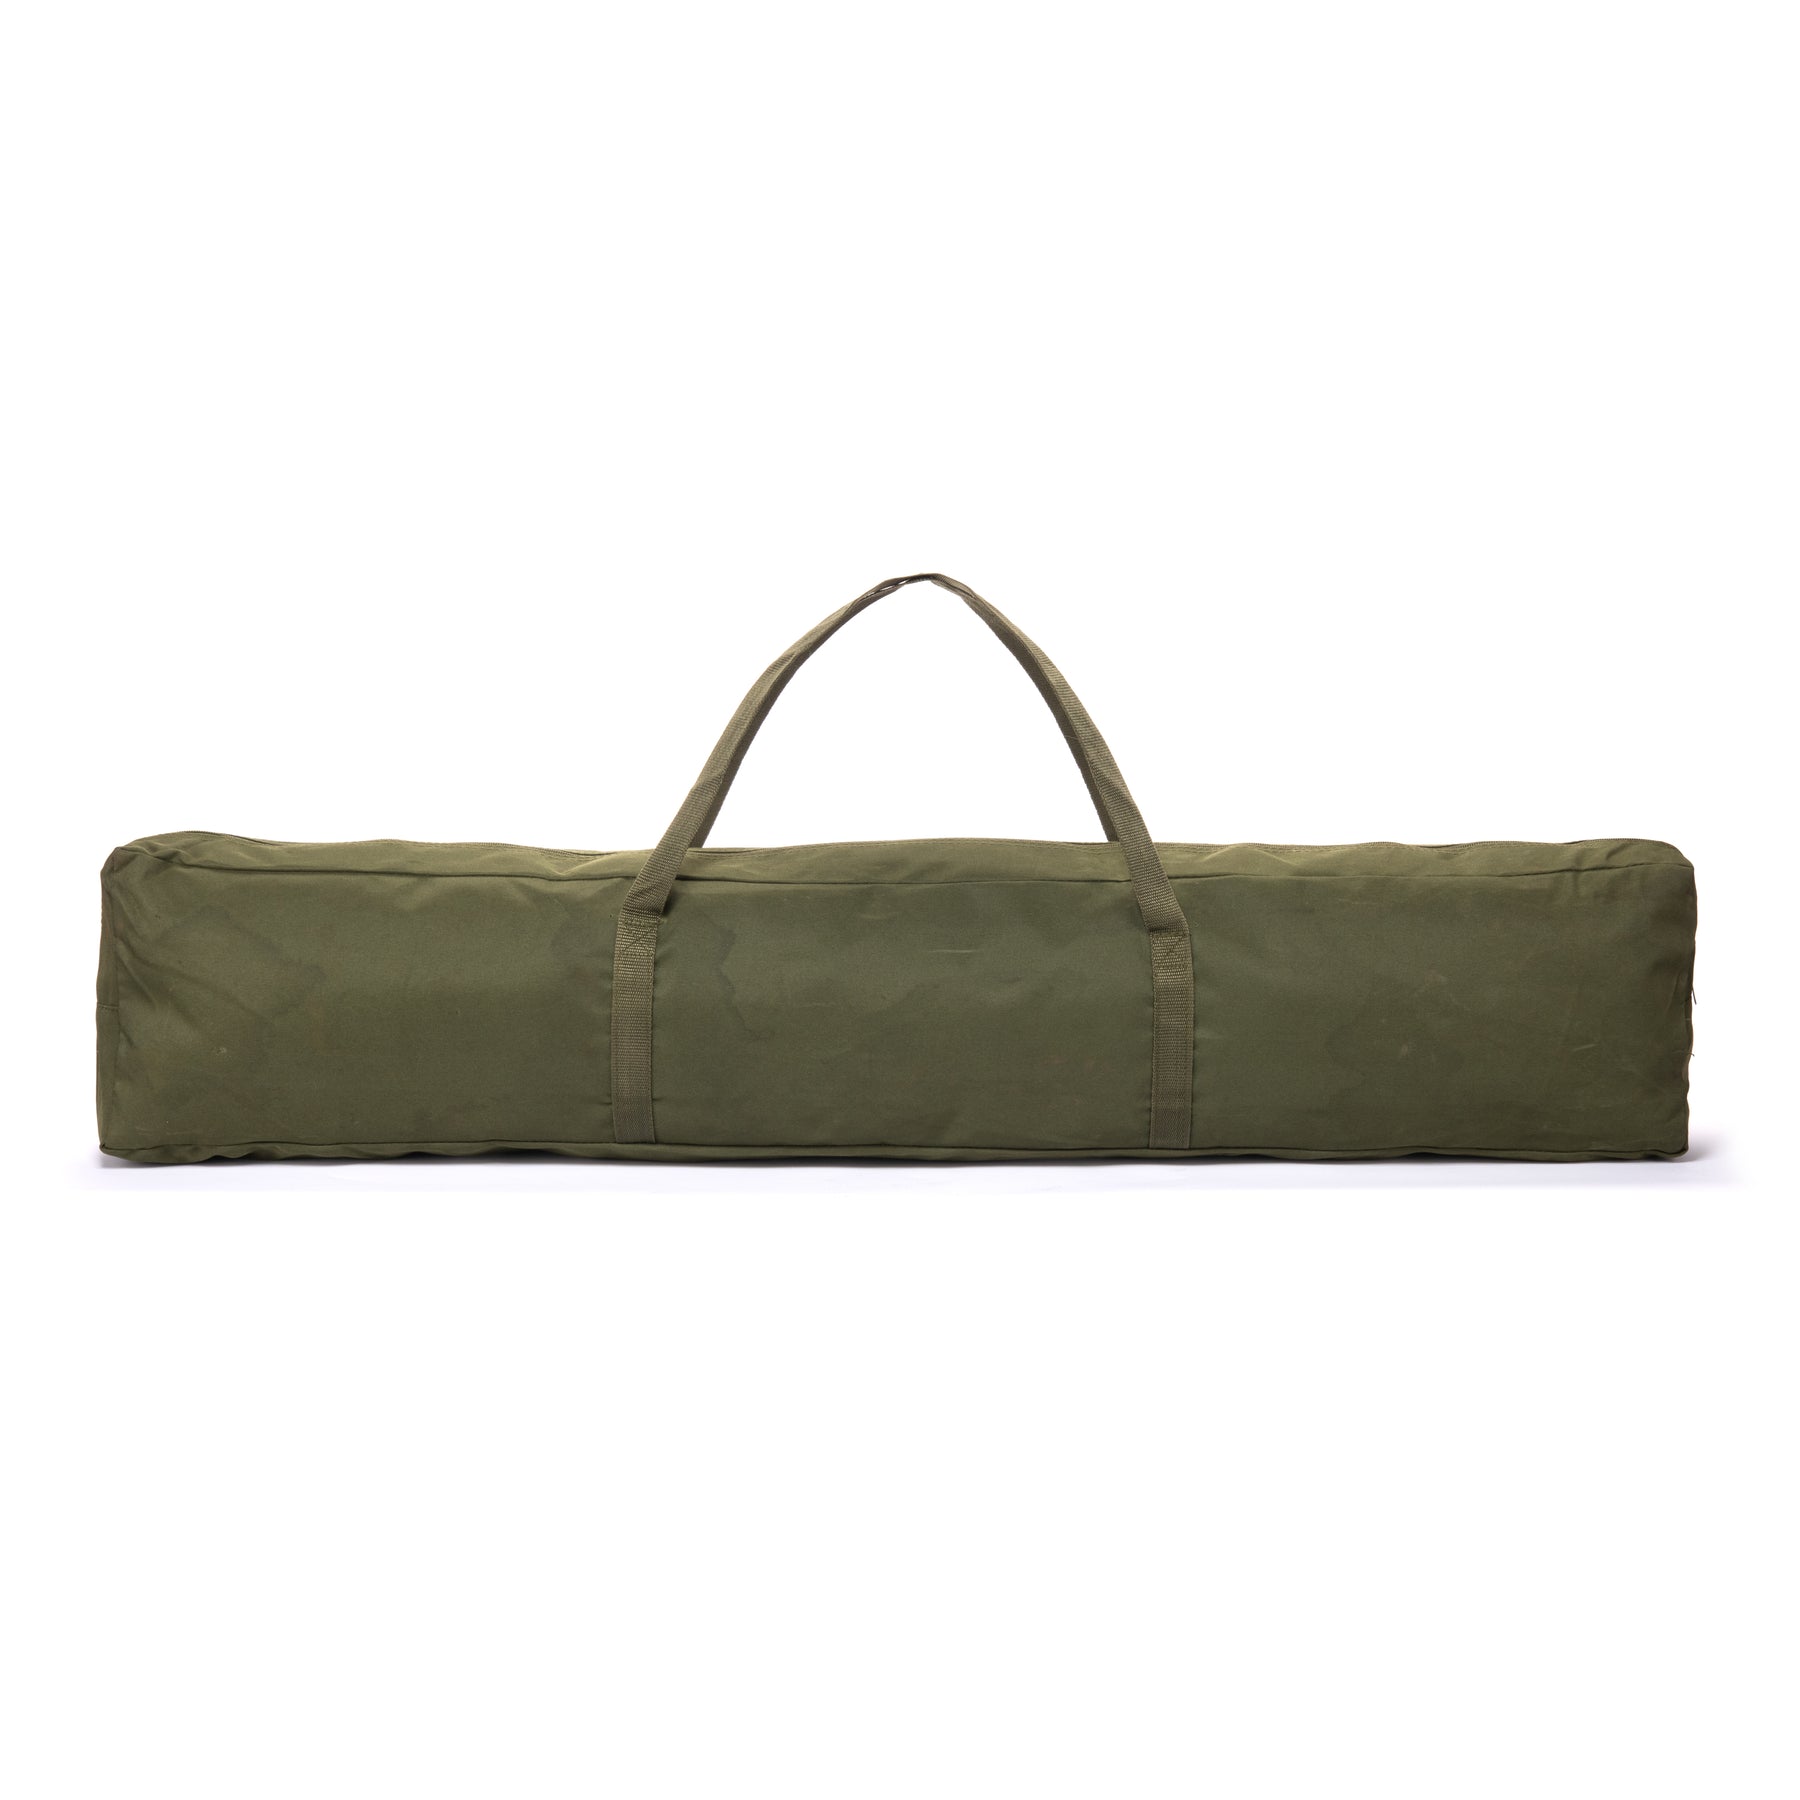 Dutch Army Duffel Bag for Cot OD | Used